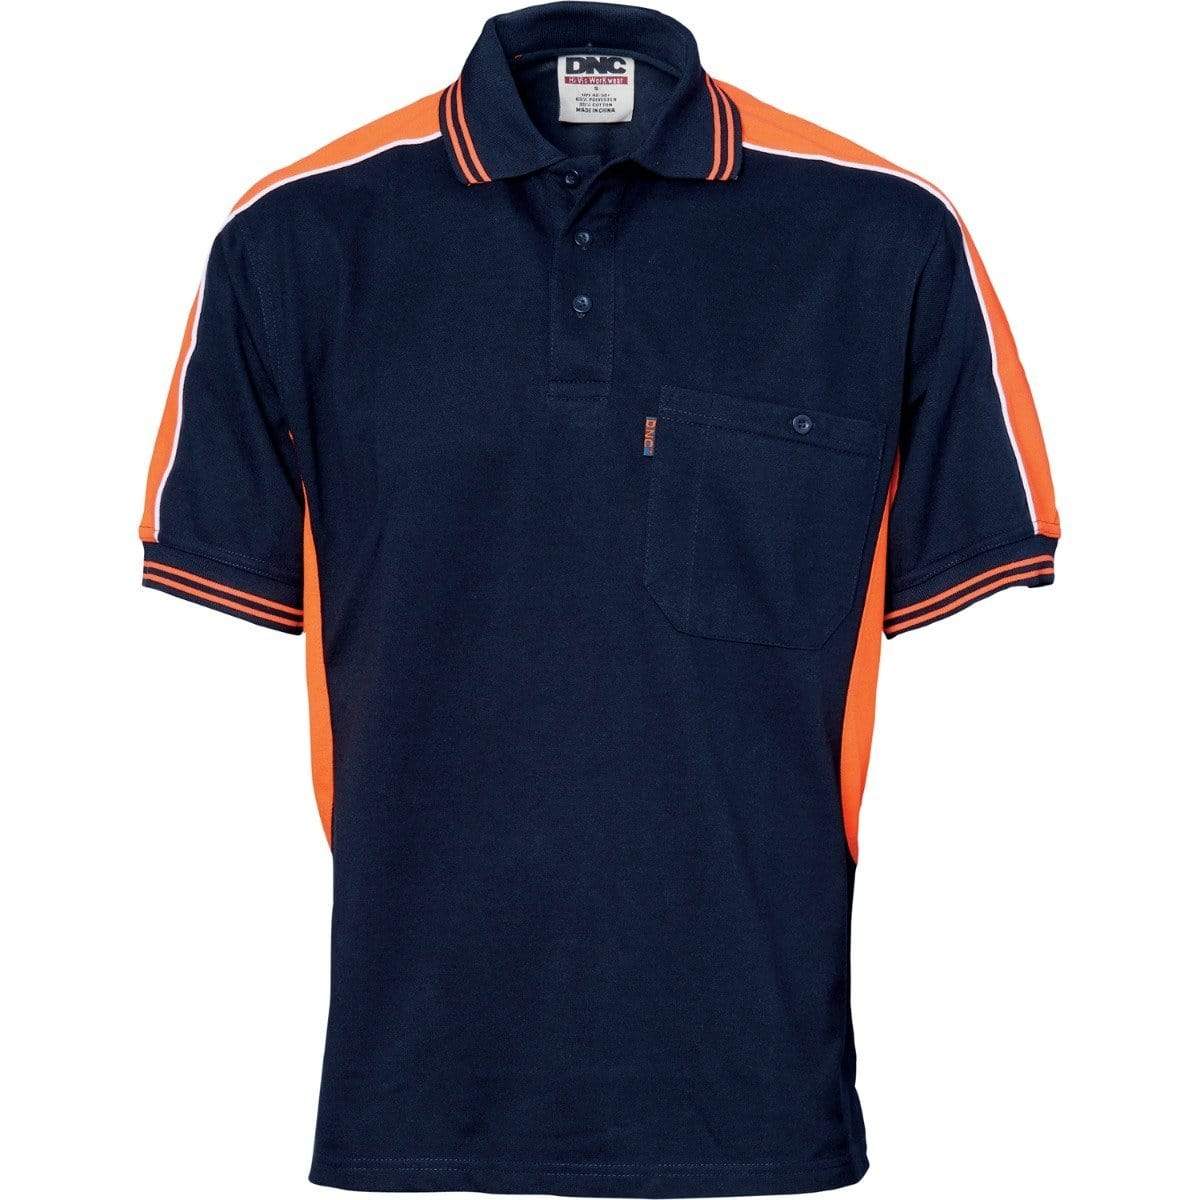 Dnc Workwear Polyester Cotton Panel Short Sleeve Polo Shirt - 5214 Work Wear DNC Workwear Navy/Orange XS 